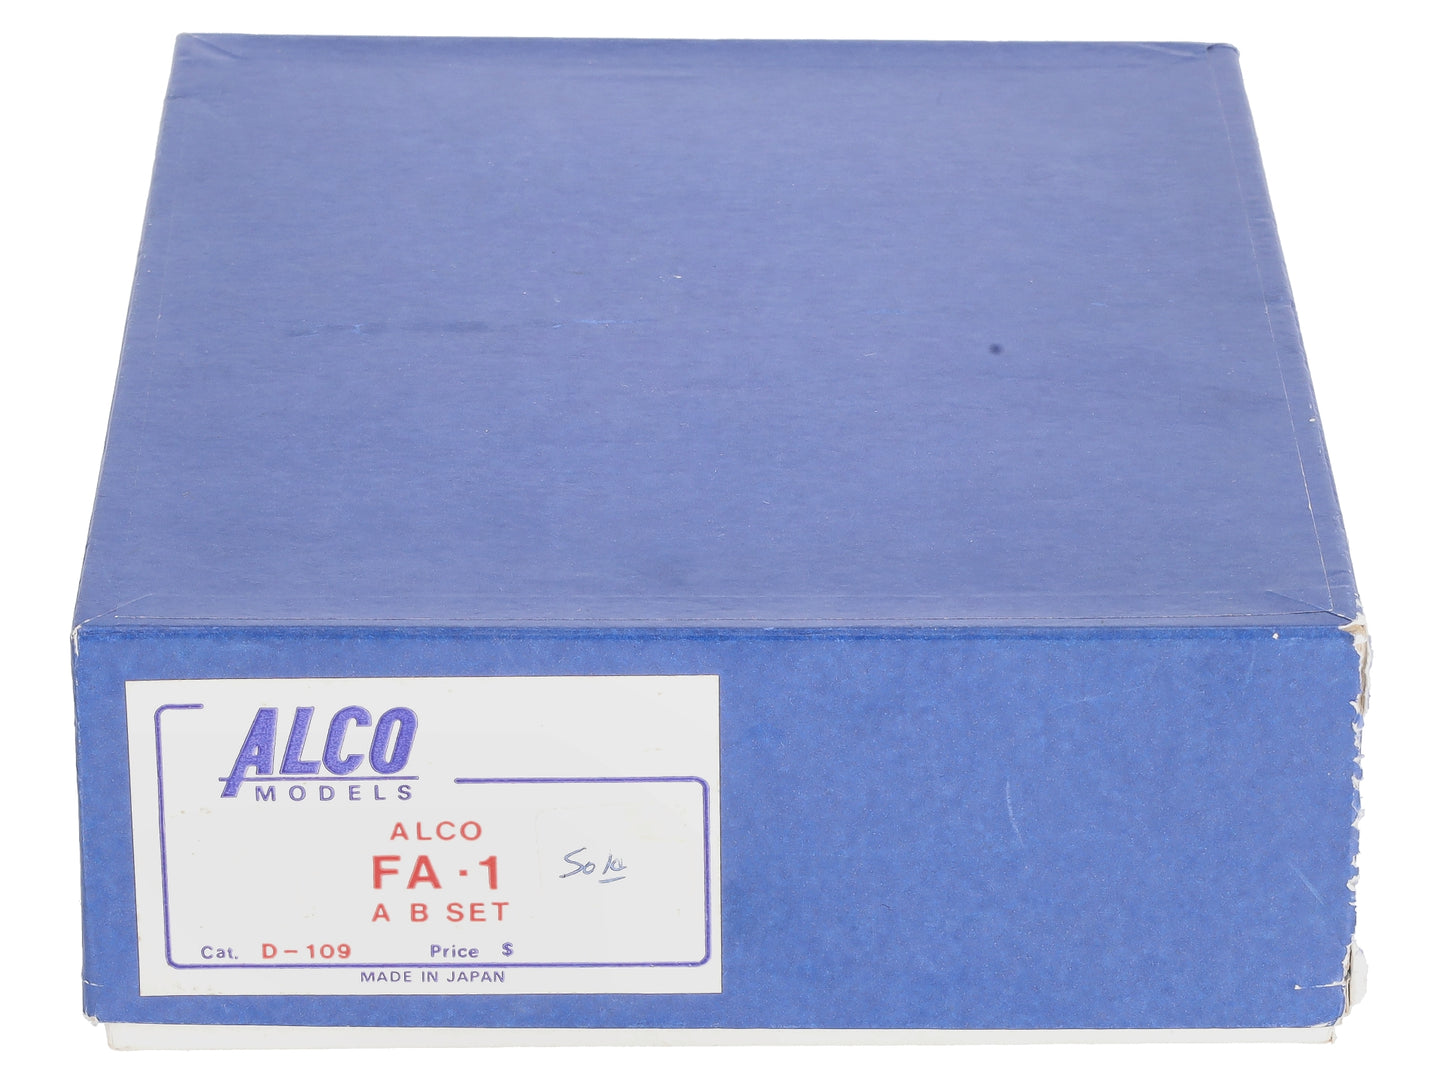 Alco Models D-109 HO Scale Brass Alco FA-1 AB Diesel Set/Box